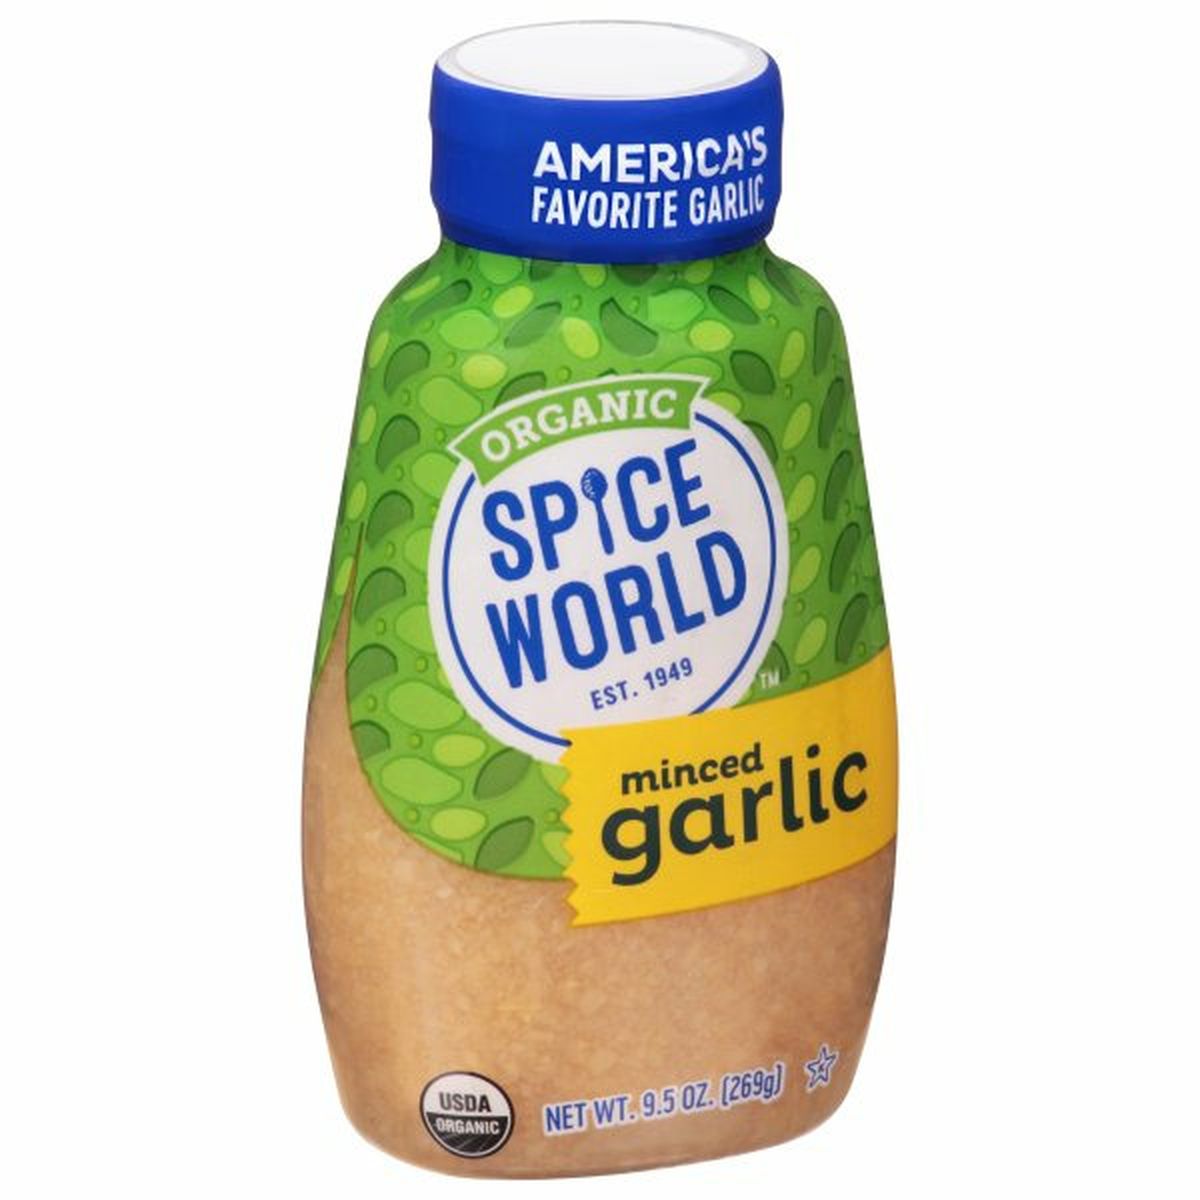 Calories in Spice World Garlic, Organic, Minced